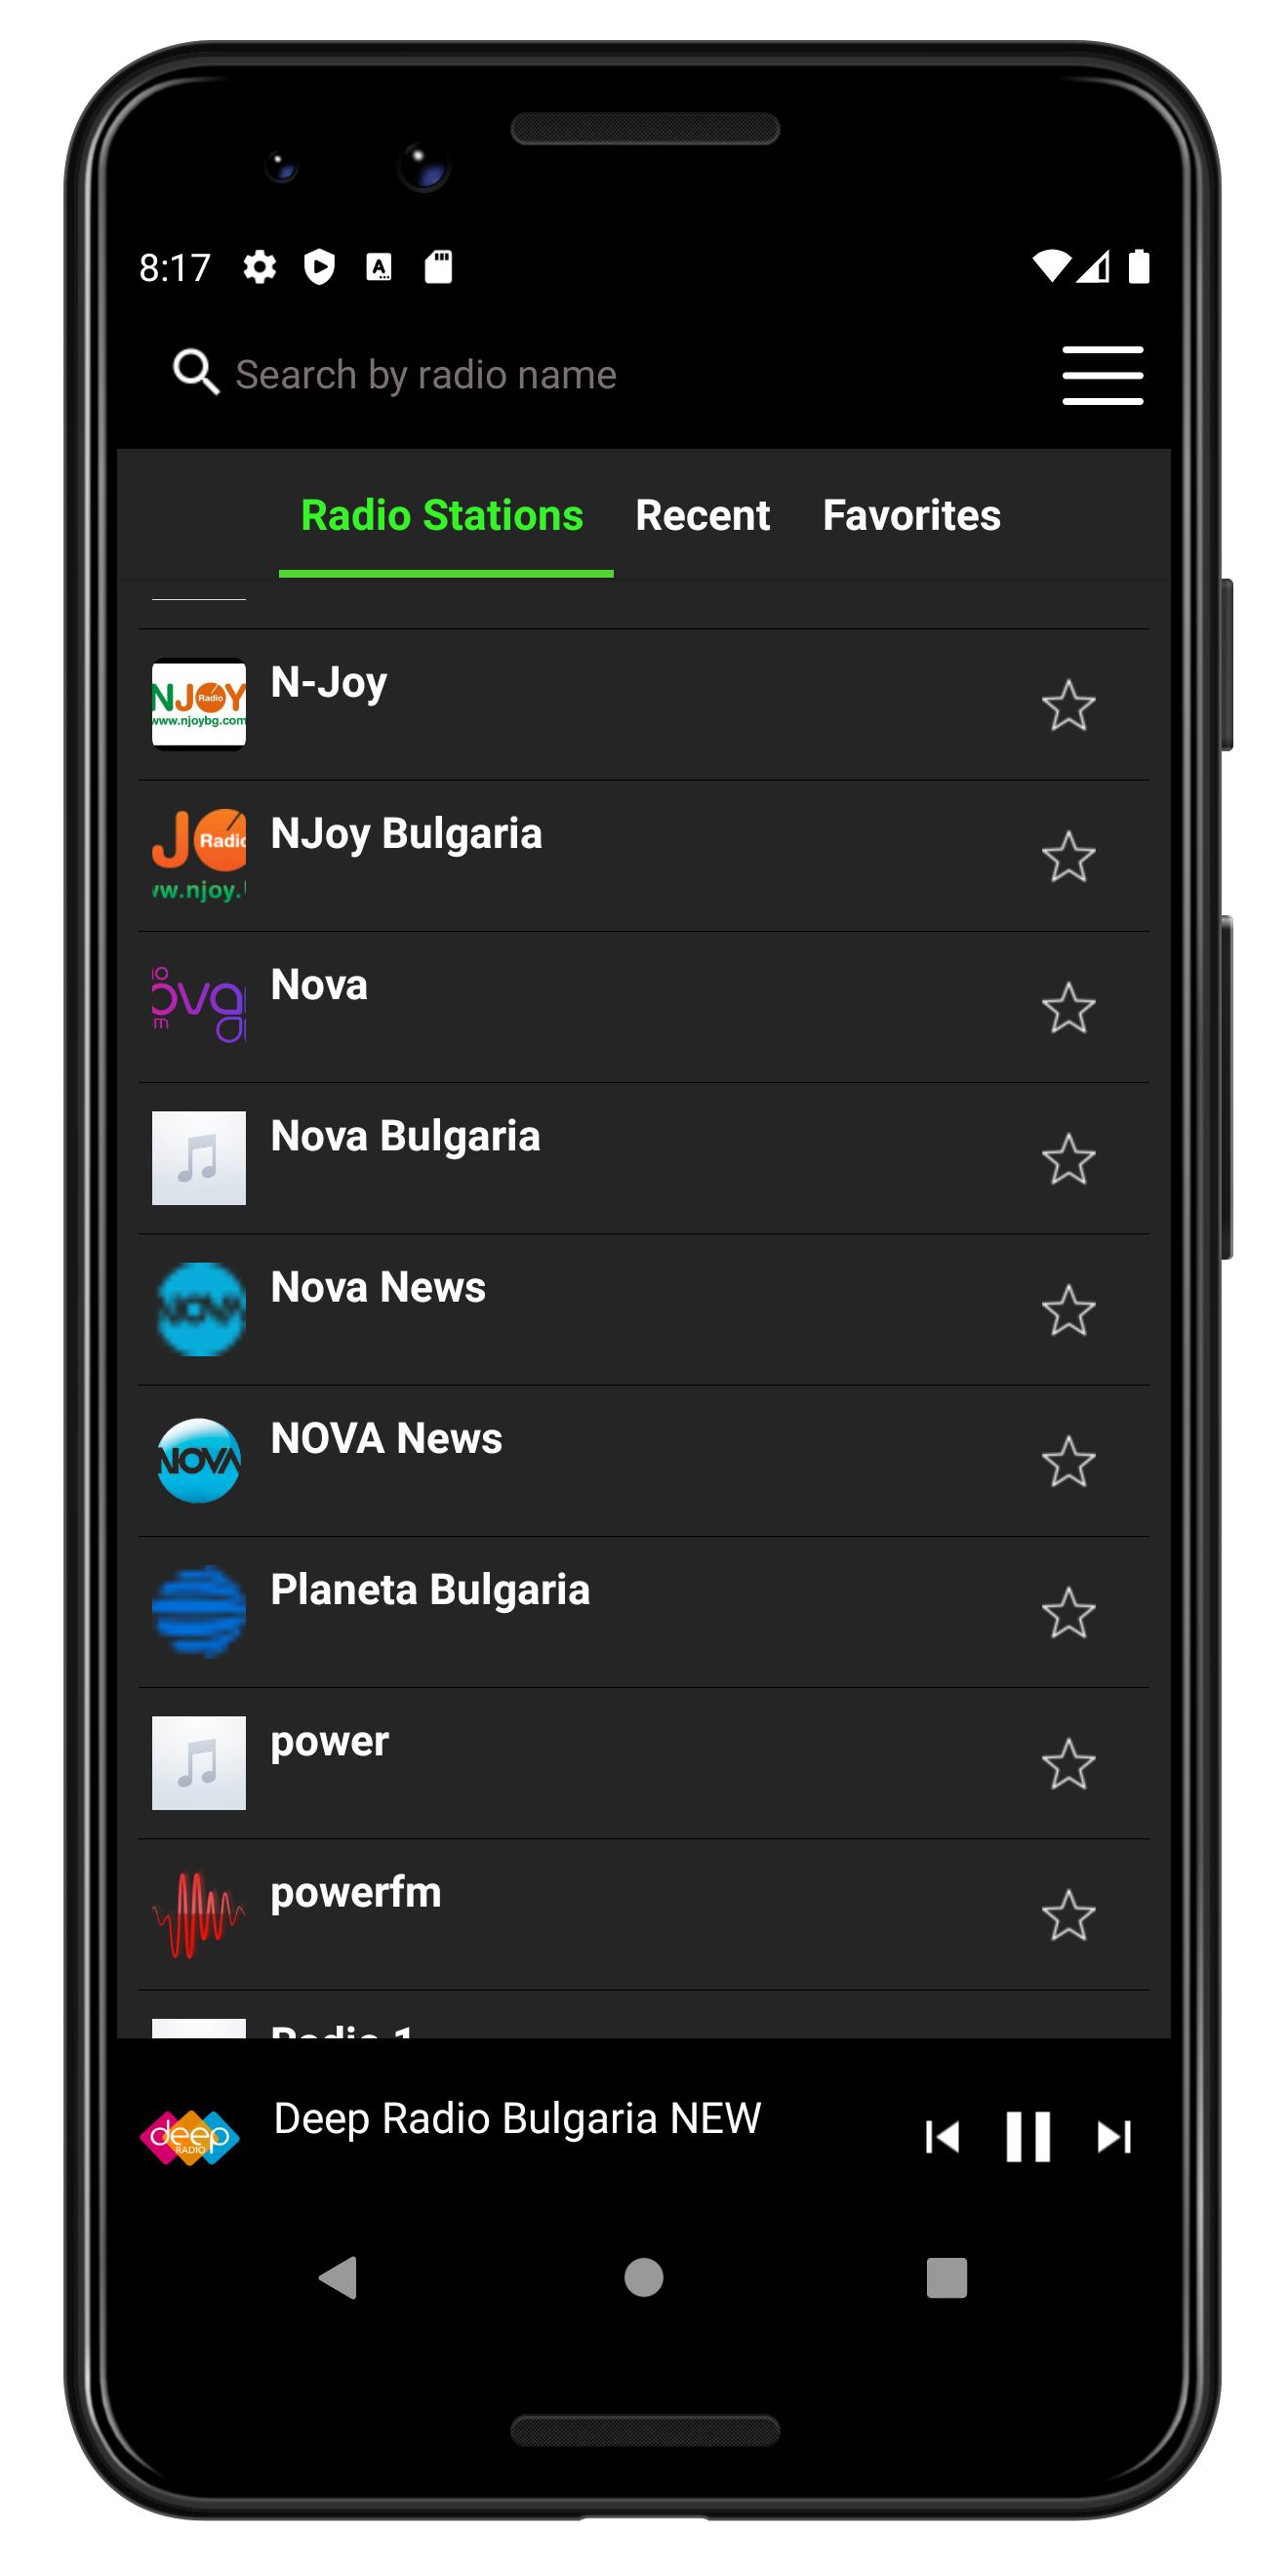 Bulgaria Radio APK (Android App) - Free Download